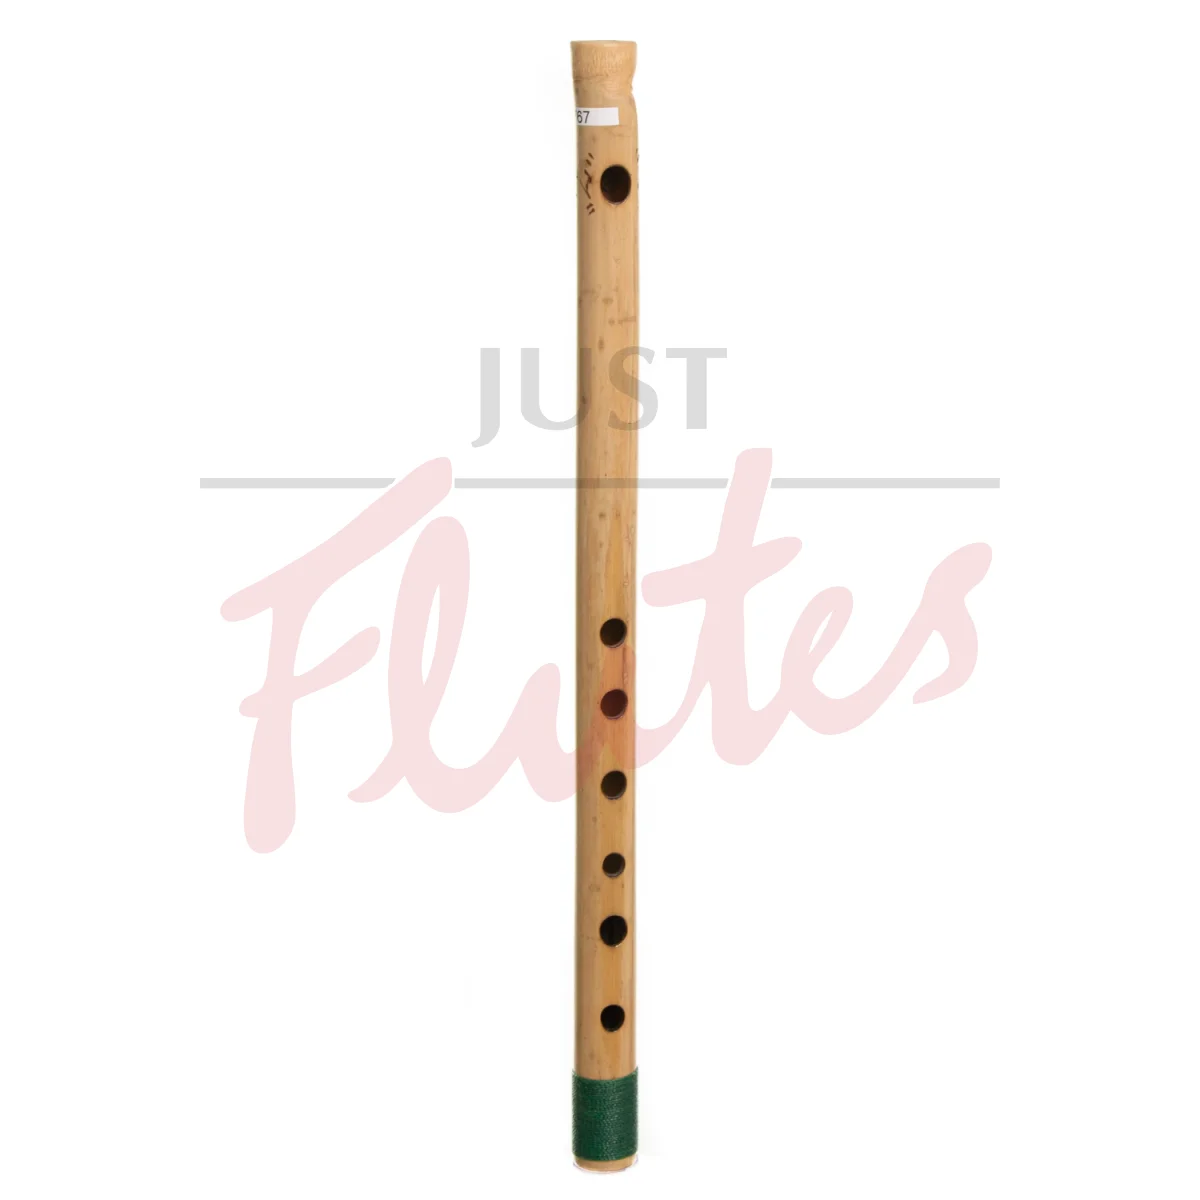 Aizen Pifano Bamboo Traditional Brazilian Flute in A